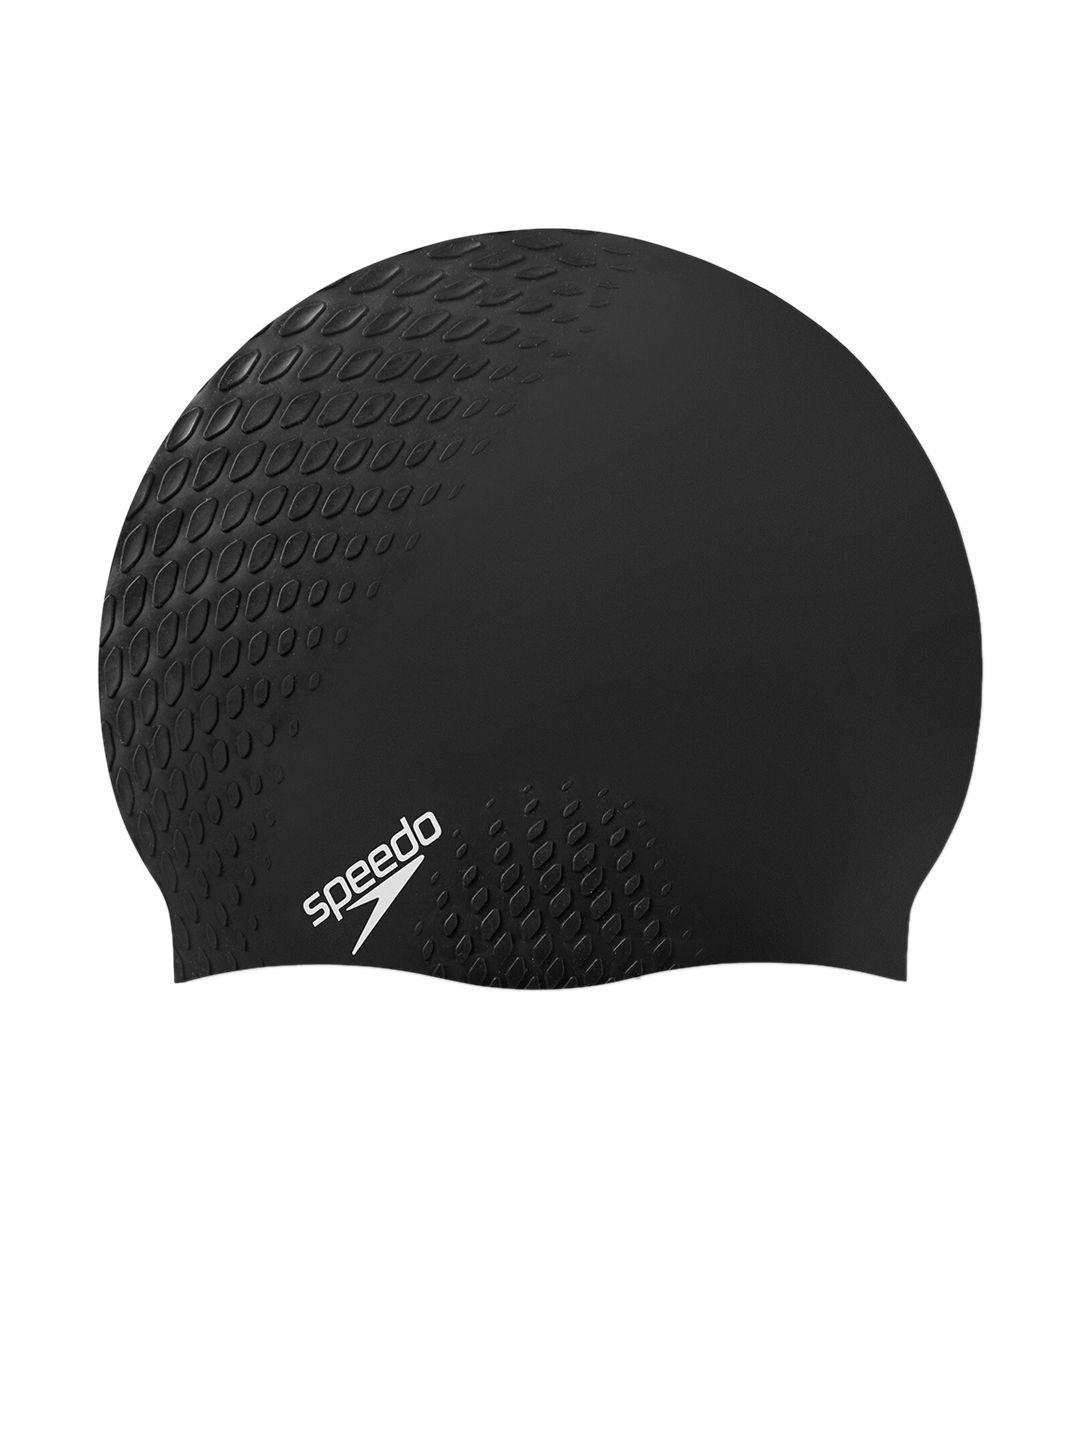 speedo textured bubble acitve swimming cap